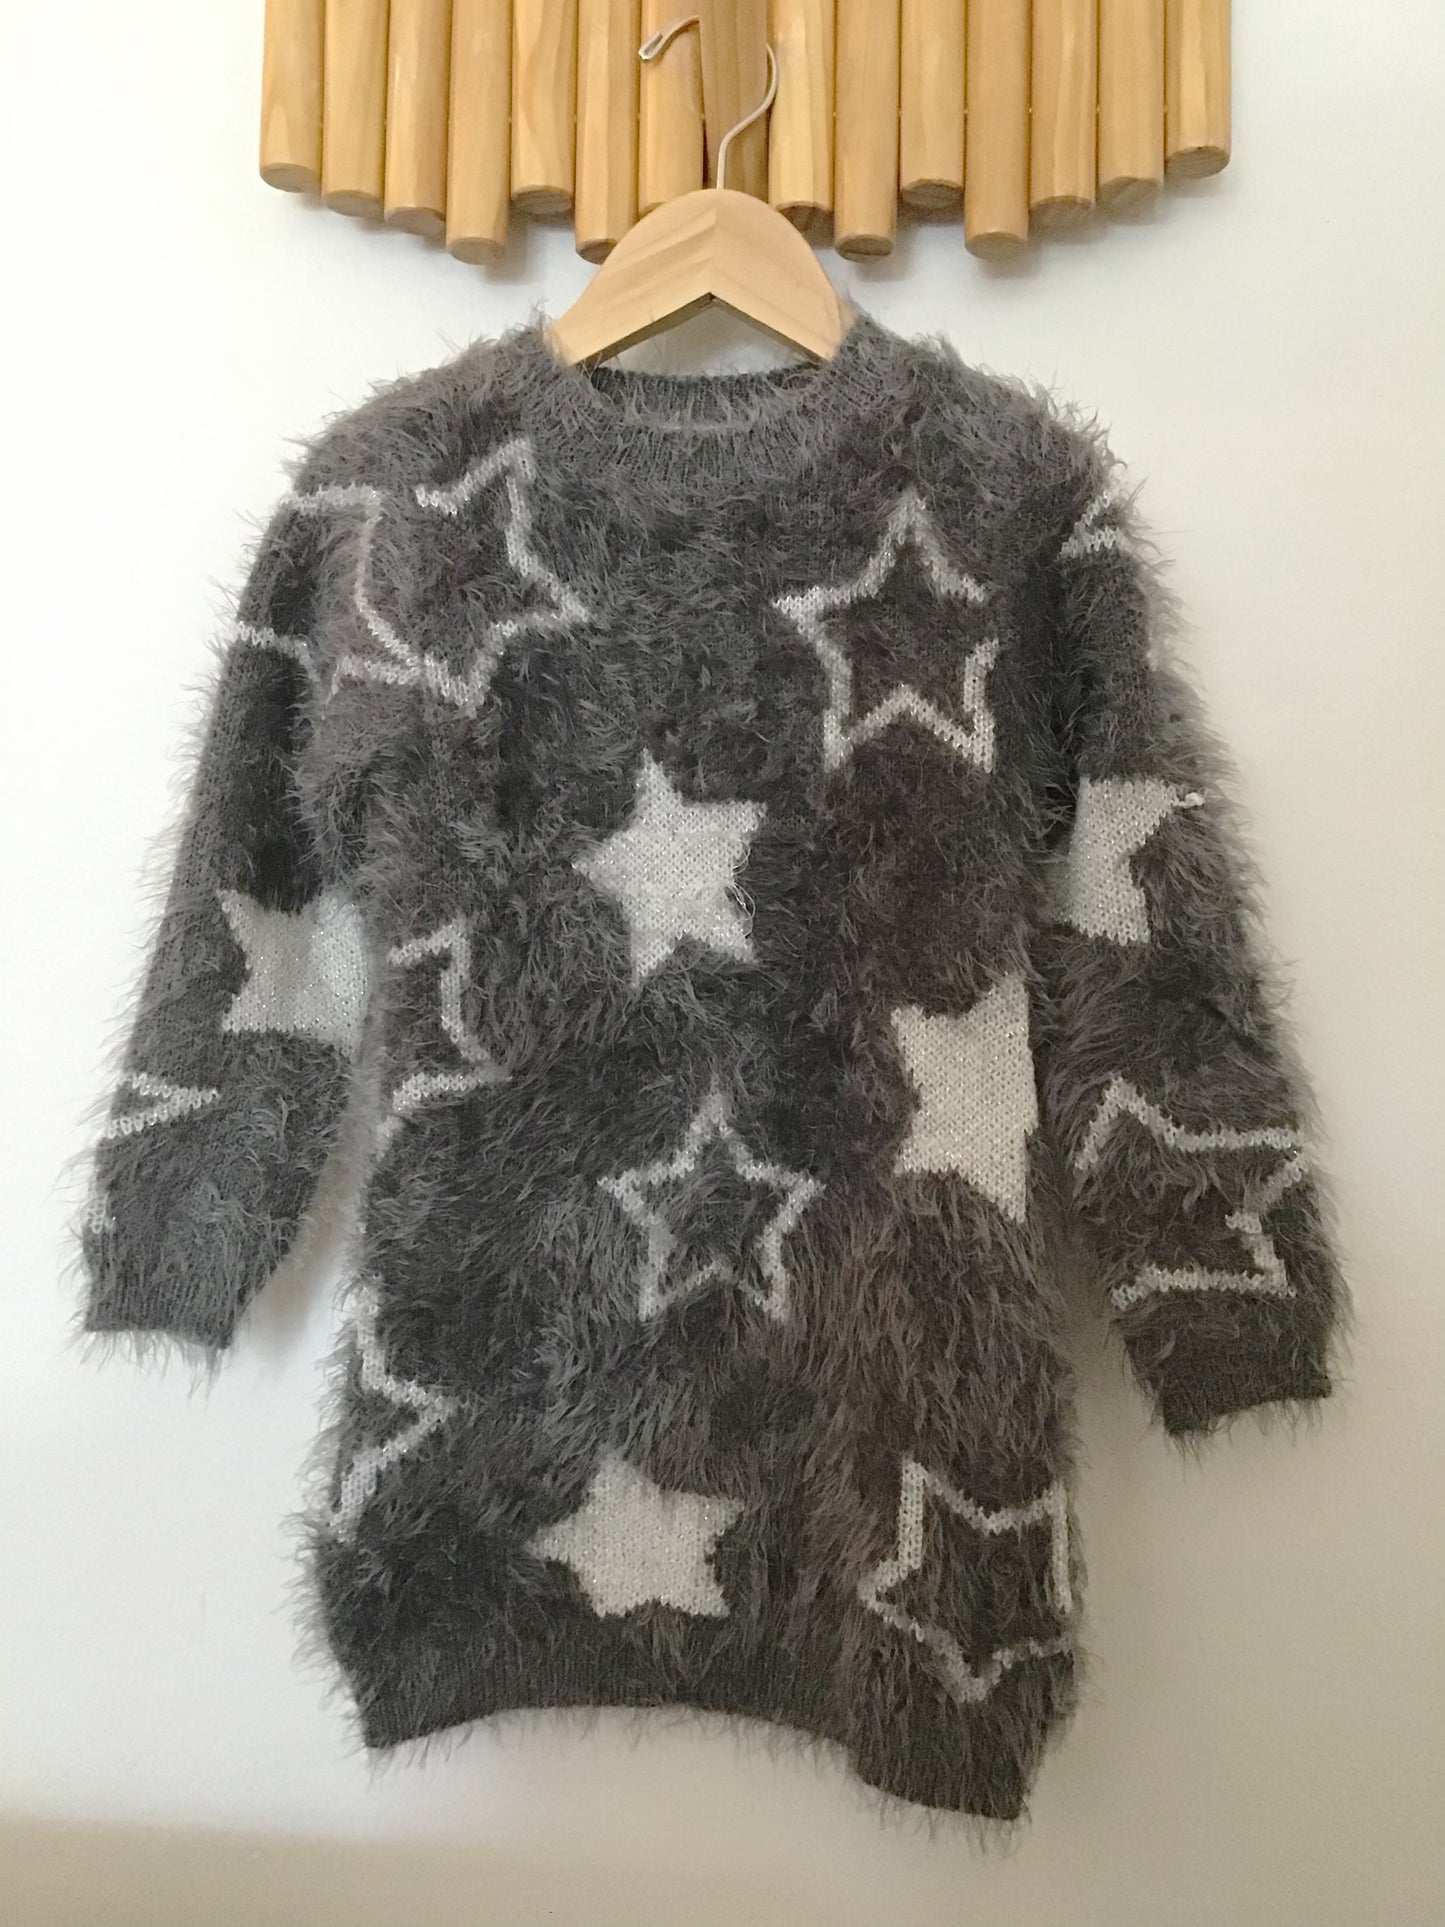 Furry stars sweater dress 2y